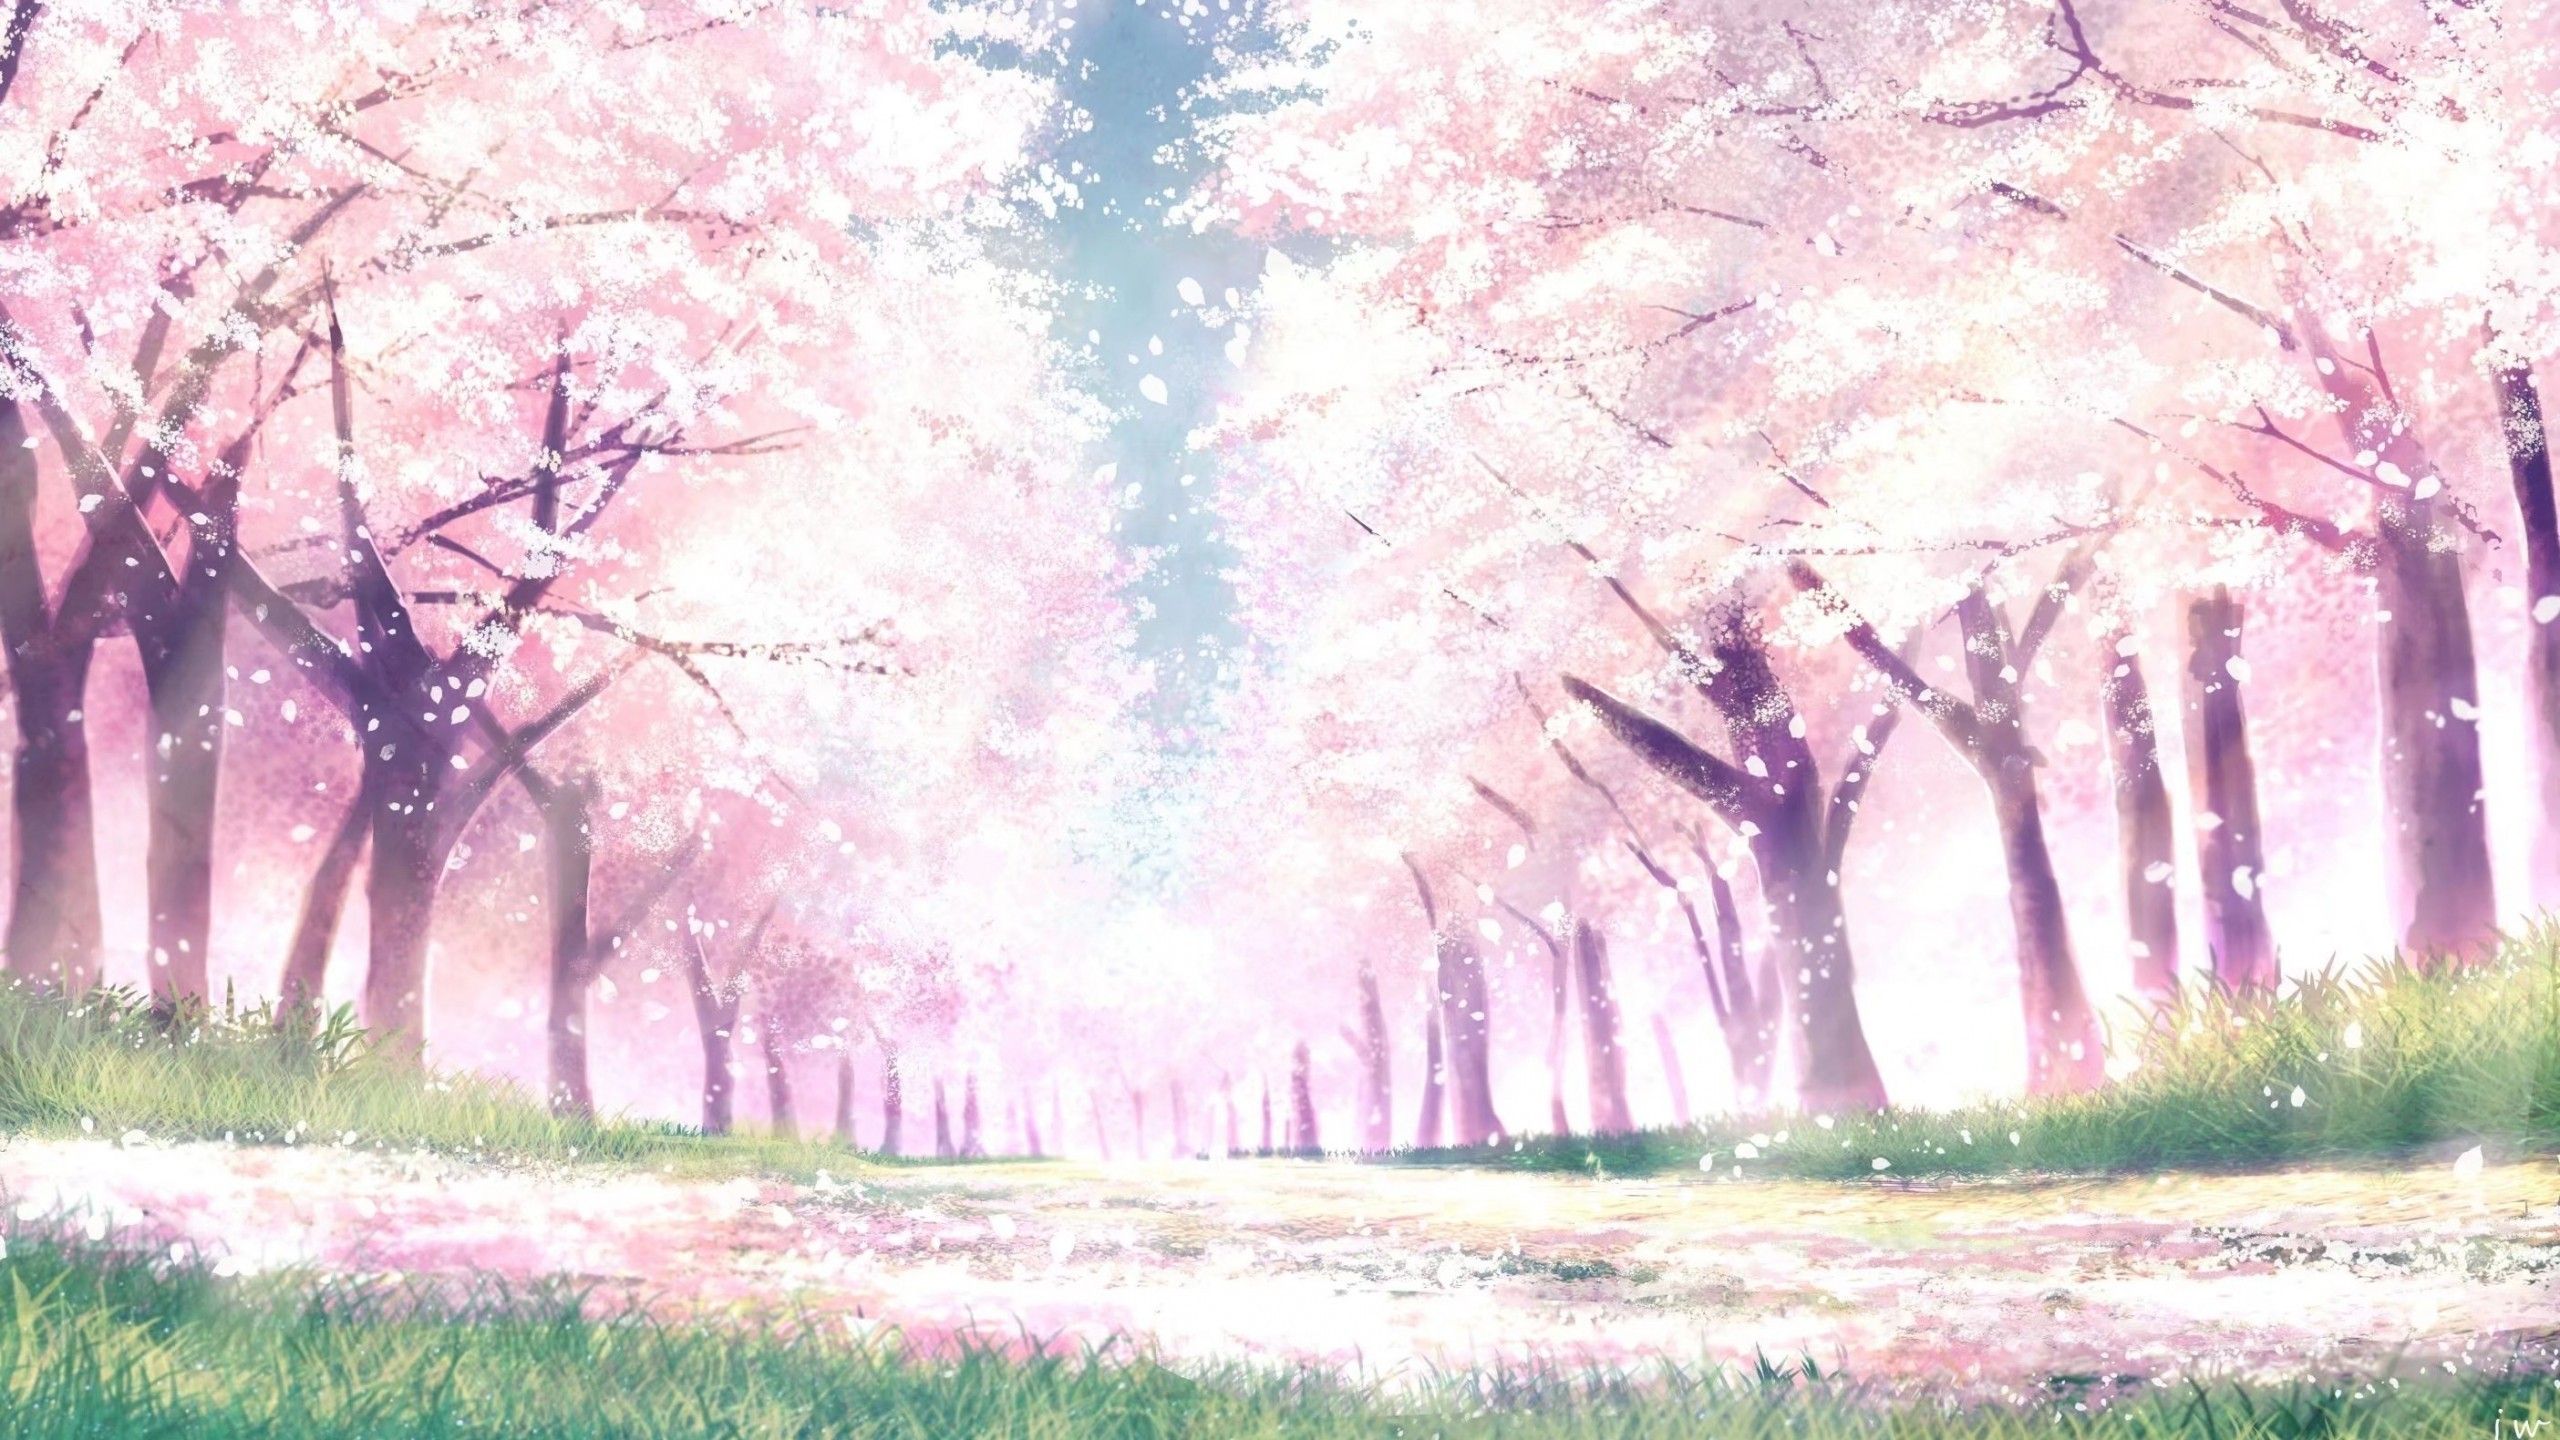 Download 2560x1440 Anime Landscape .wallpapermaiden.com